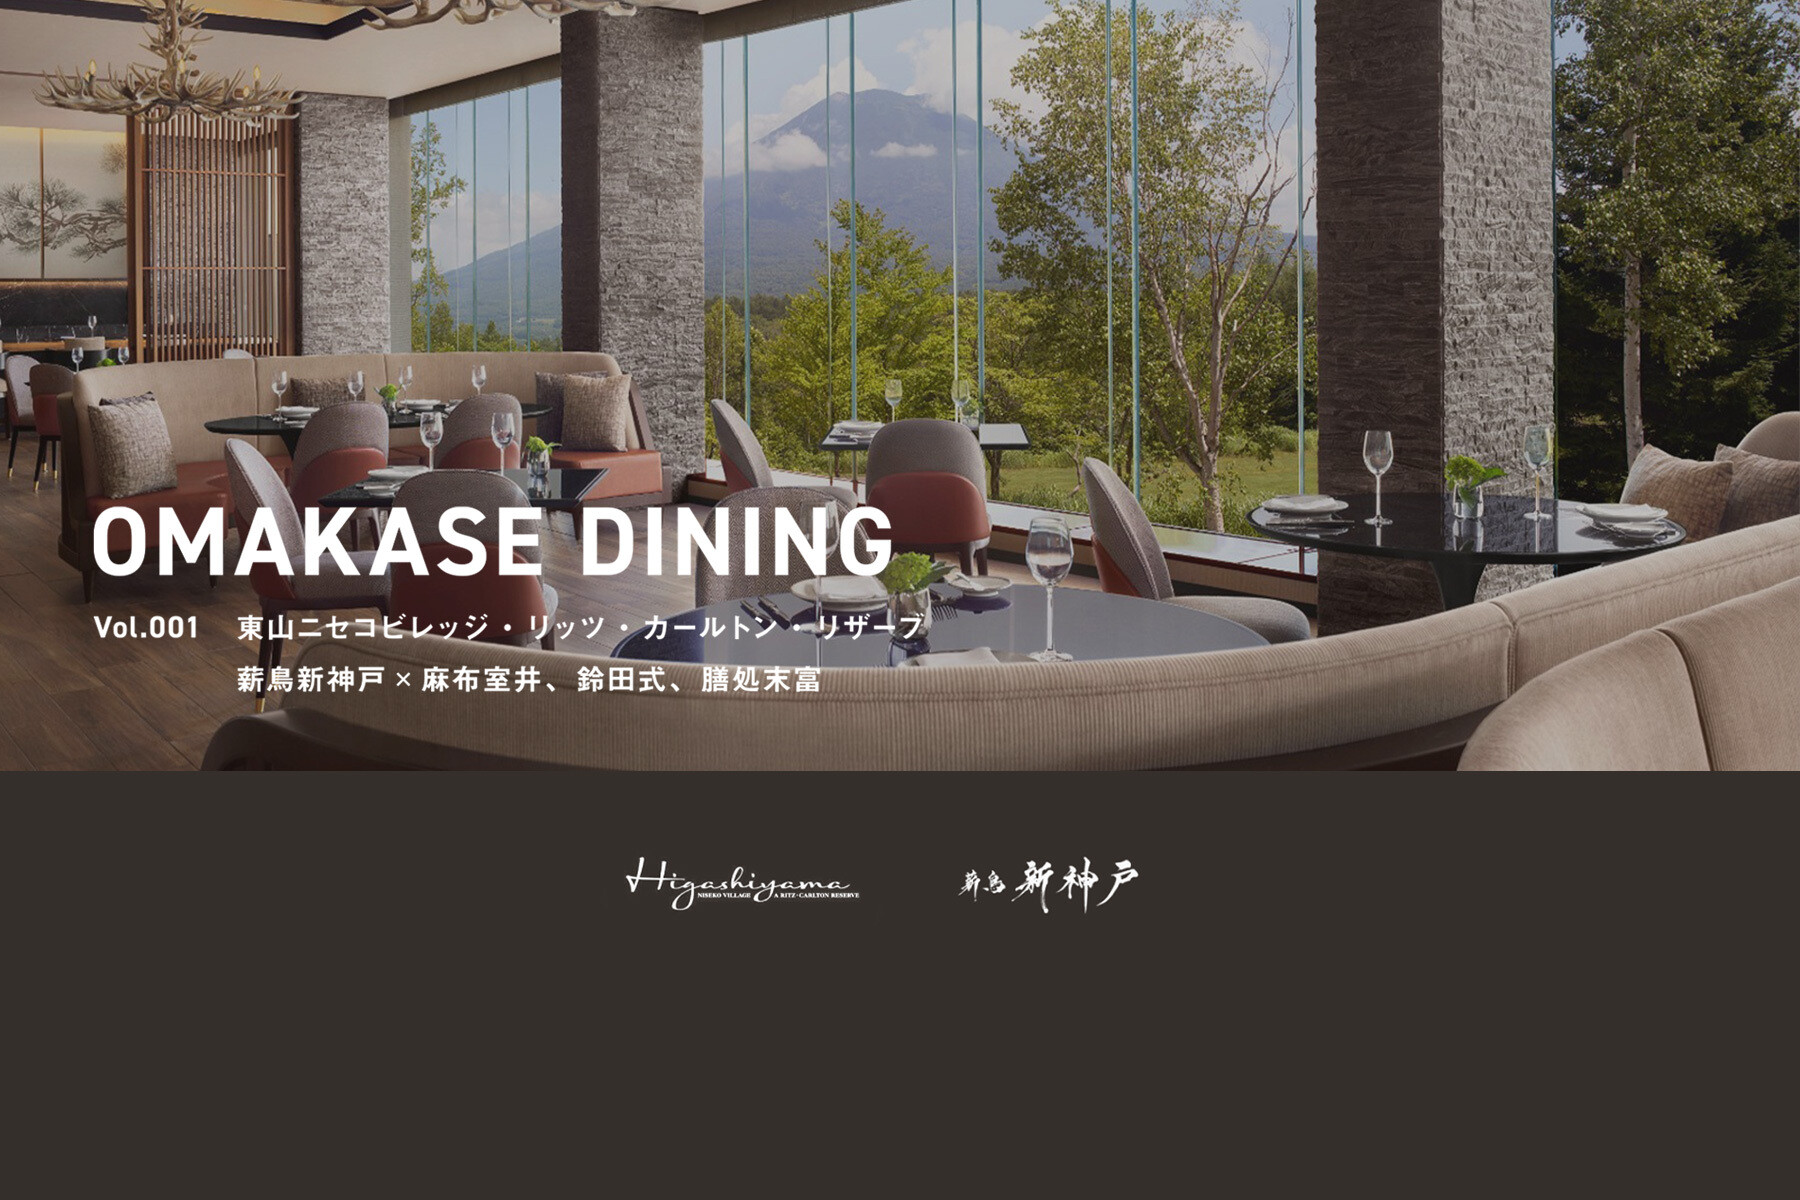 【Acceptance of applications closed】OMAKASE DINING Vol.001 | Higashiyama Niseko Village | Ritz Carlton Reserve |Makitori Shinkobe(first-served reservations)'s images1